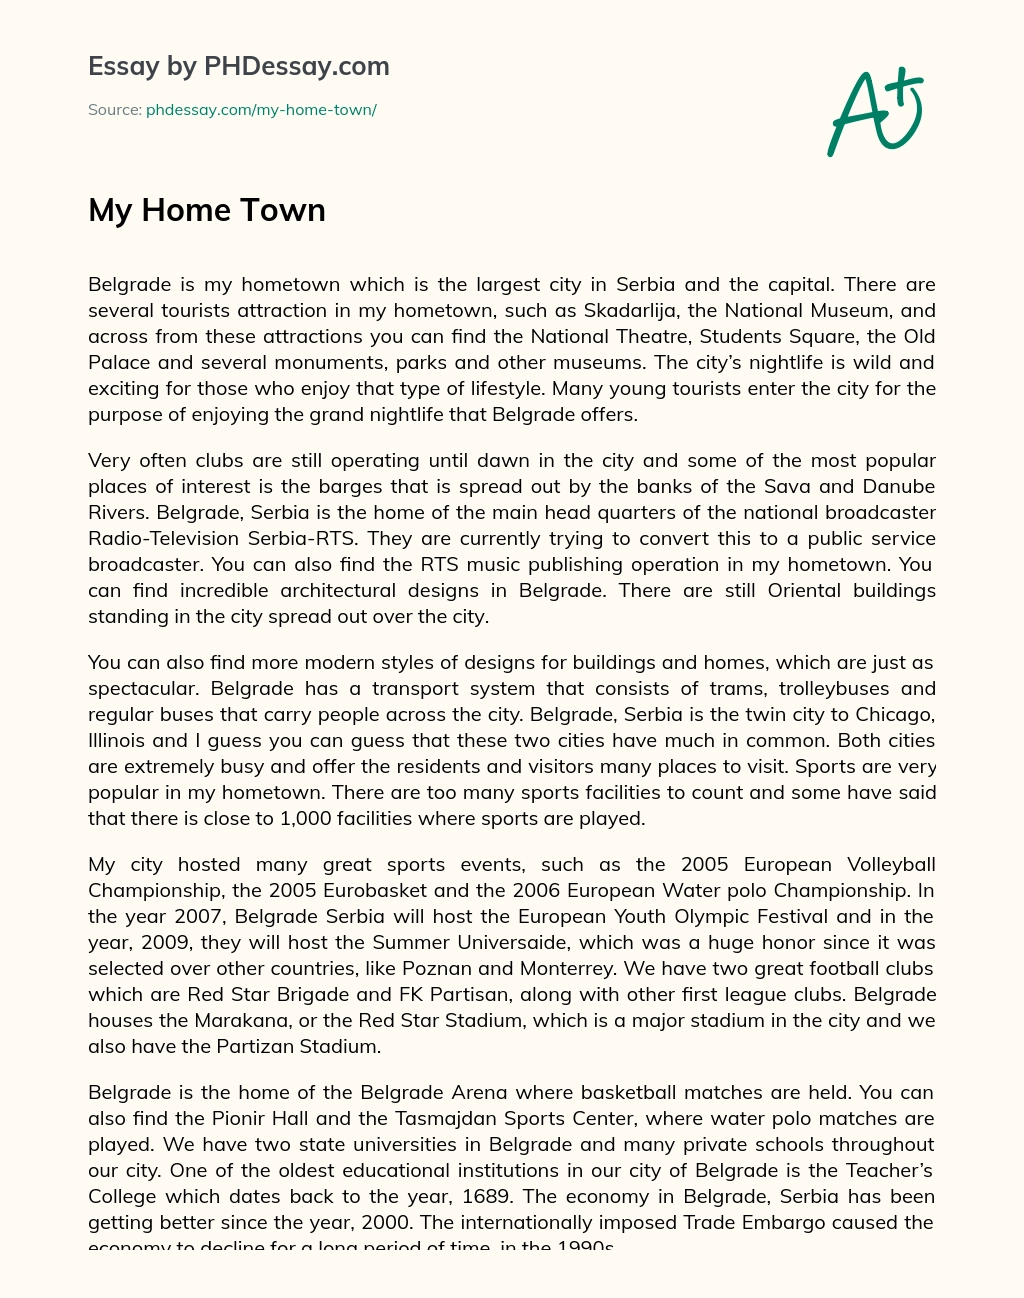 my home town essay in myanmar